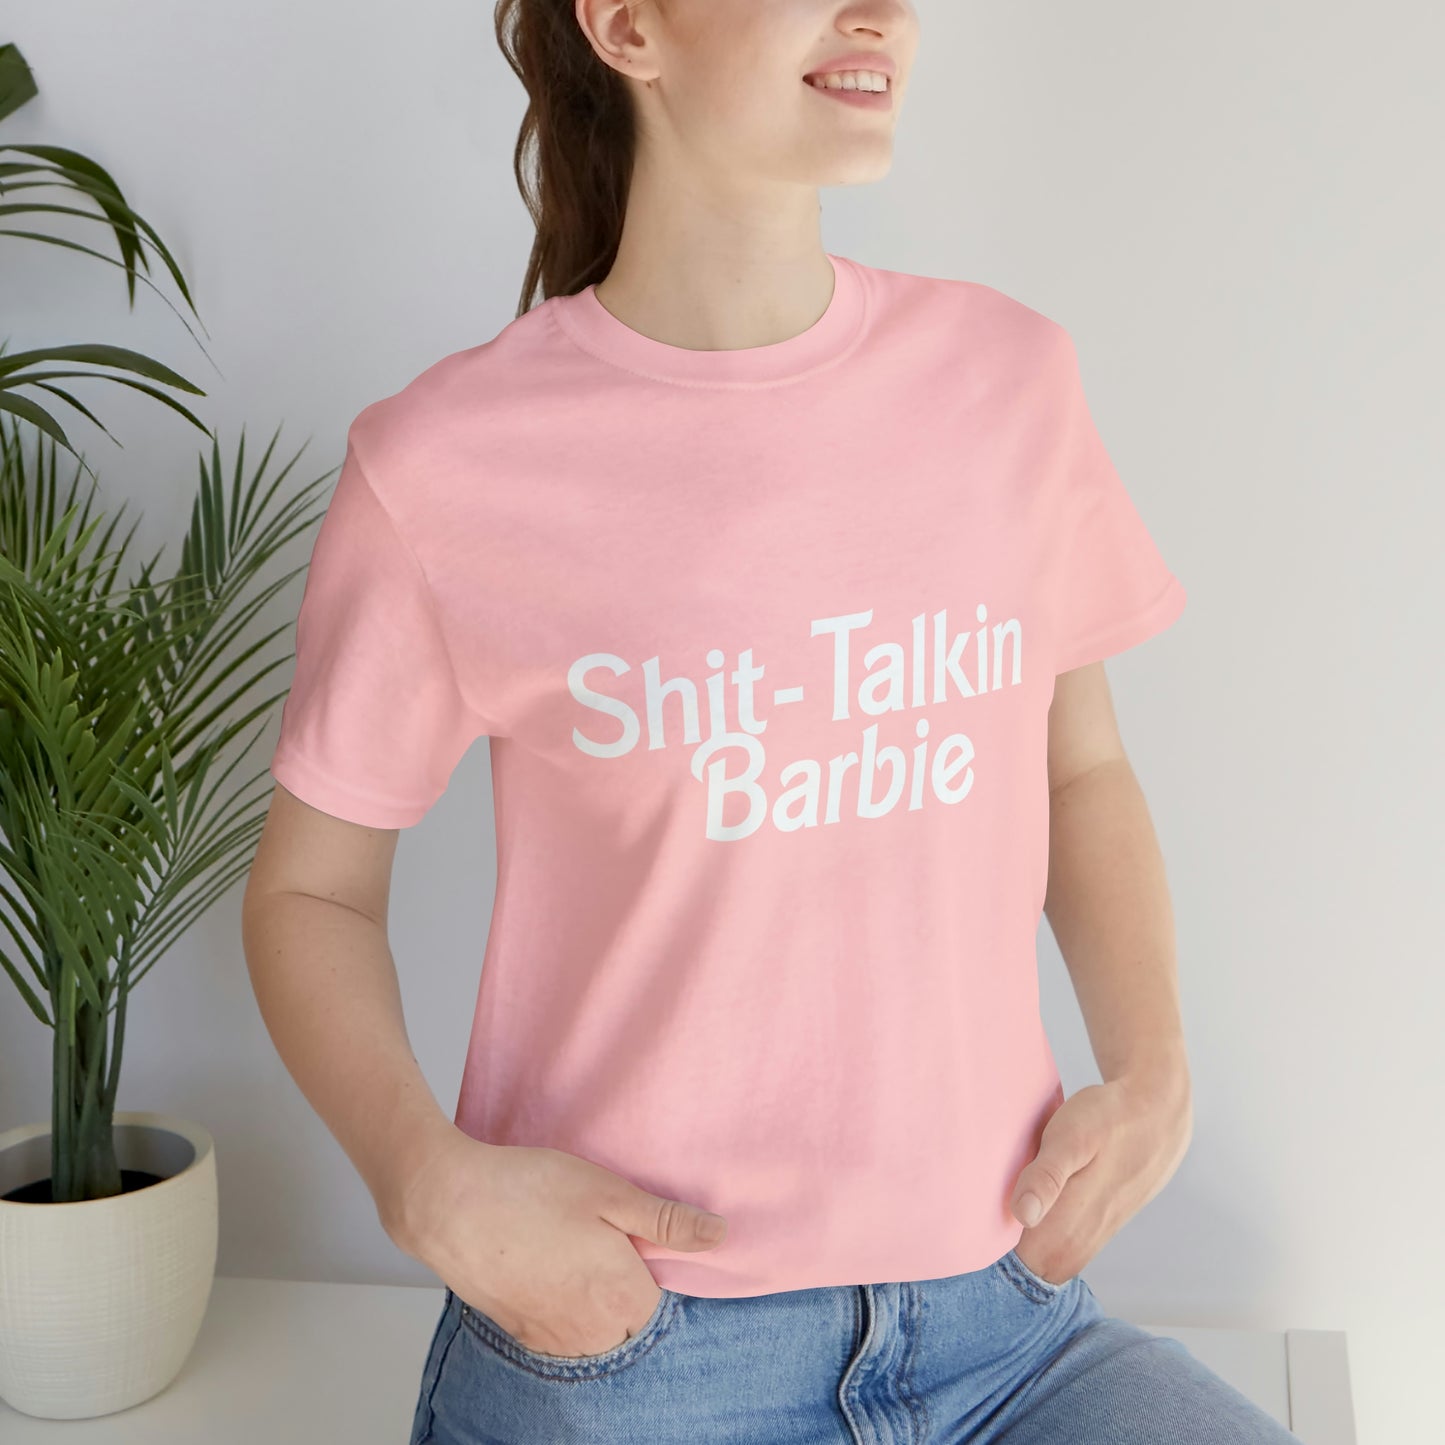 Shit-Talkin' Barbie